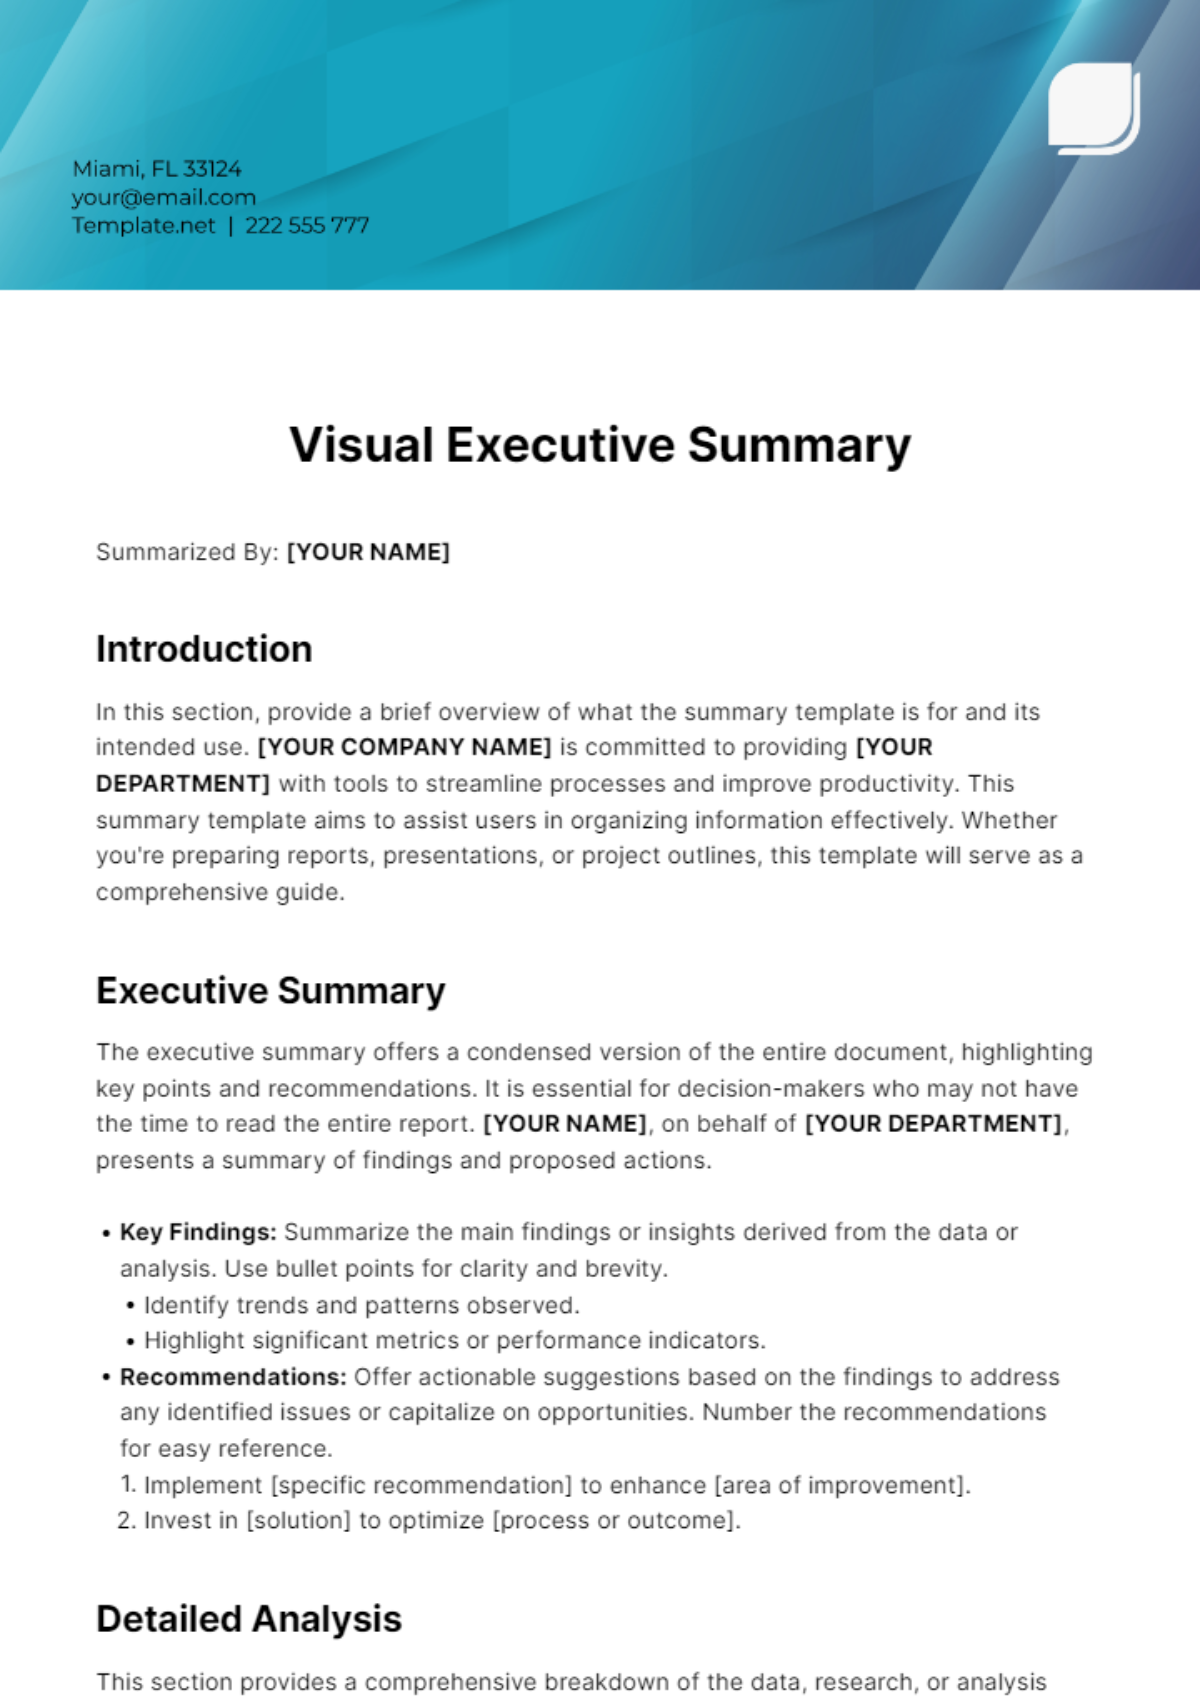 Visual Executive Summary Template